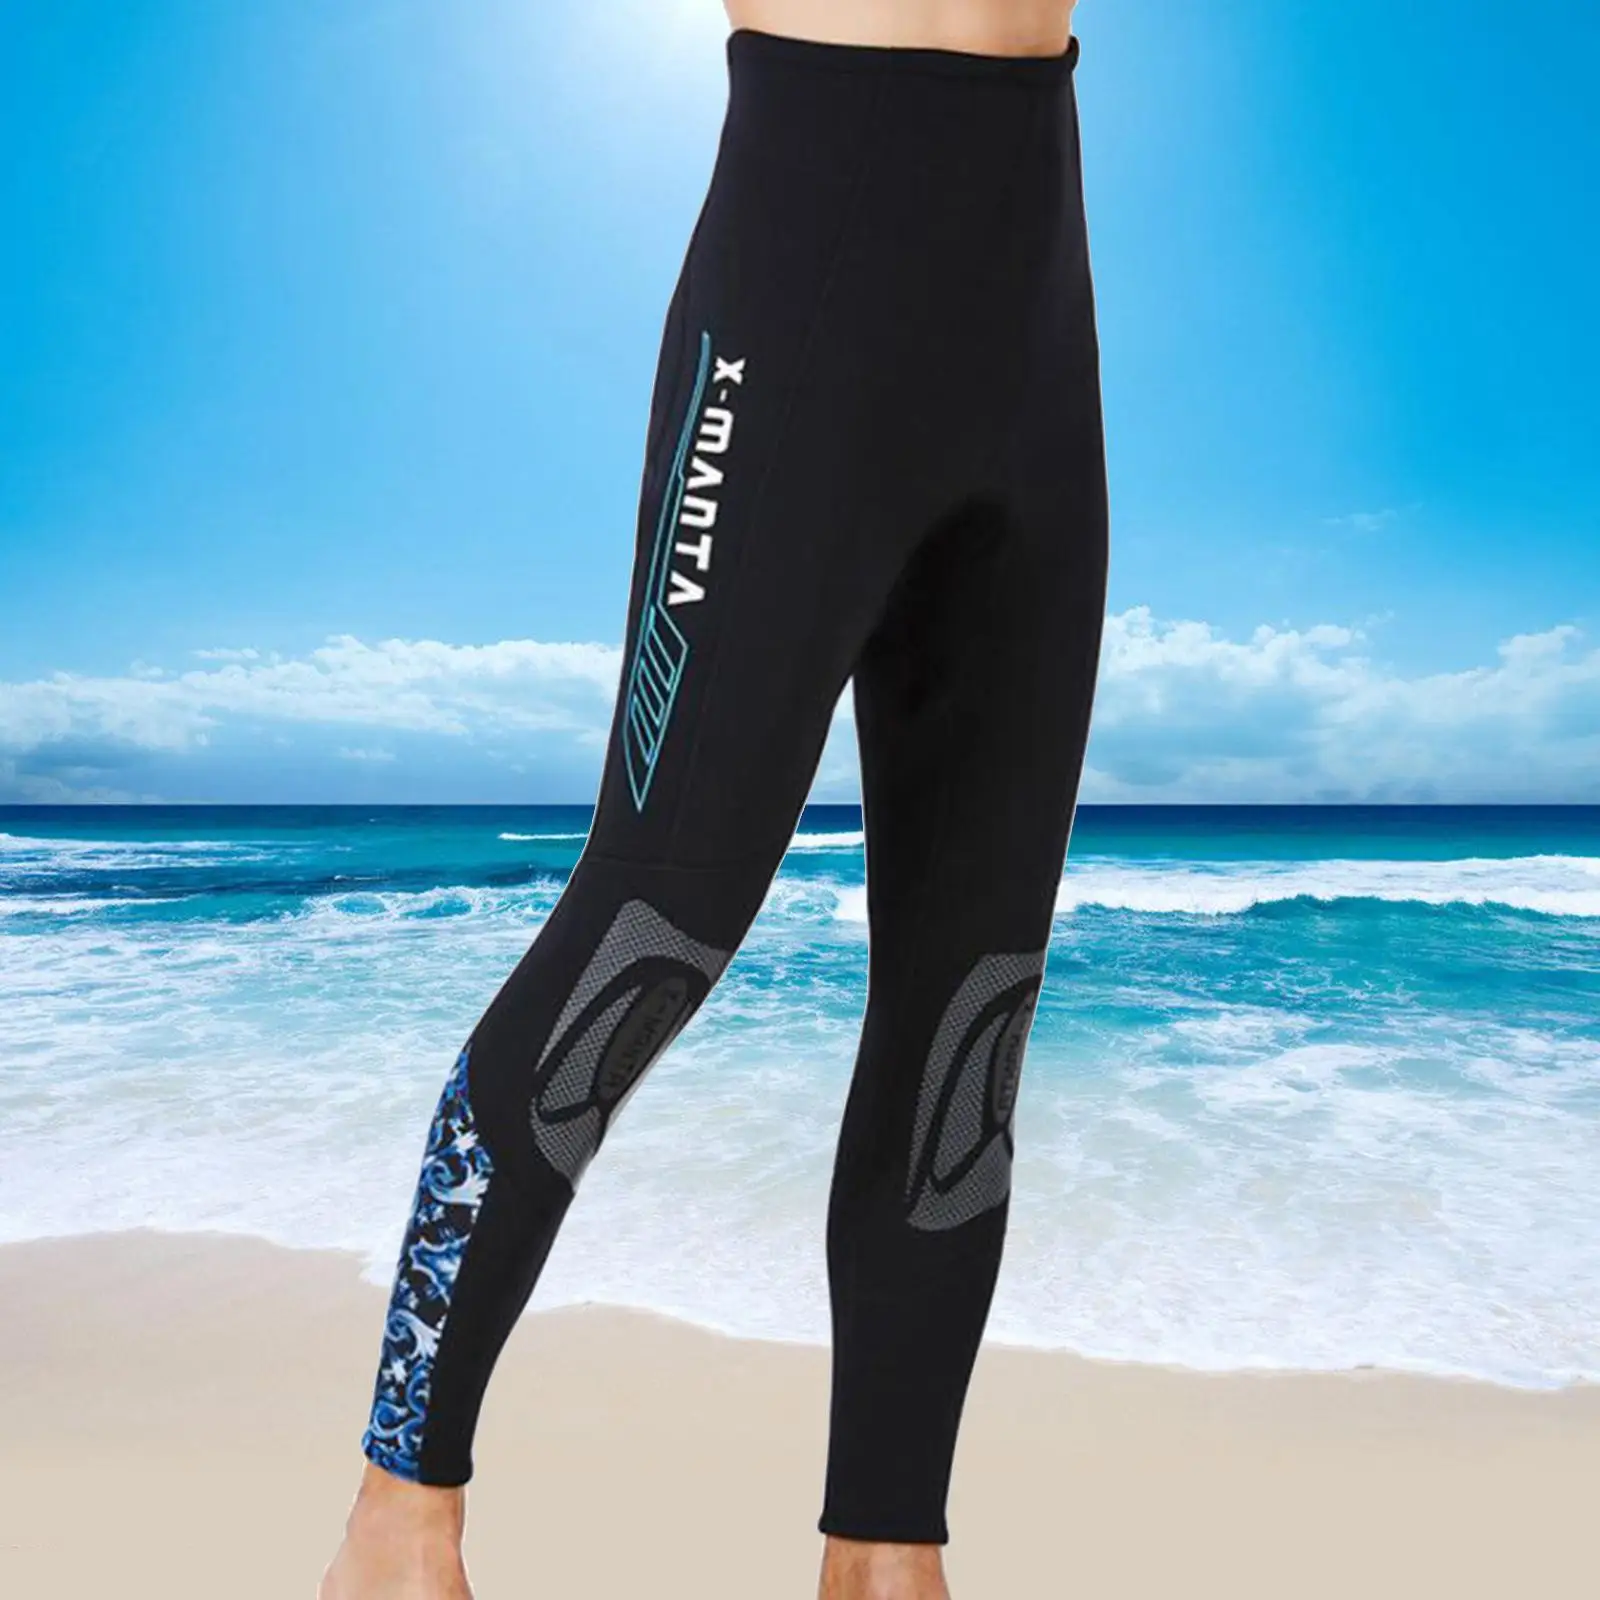 Adults Wetsuit Pant Water Sports Leggings Keep Warm for Underwater Swimwear